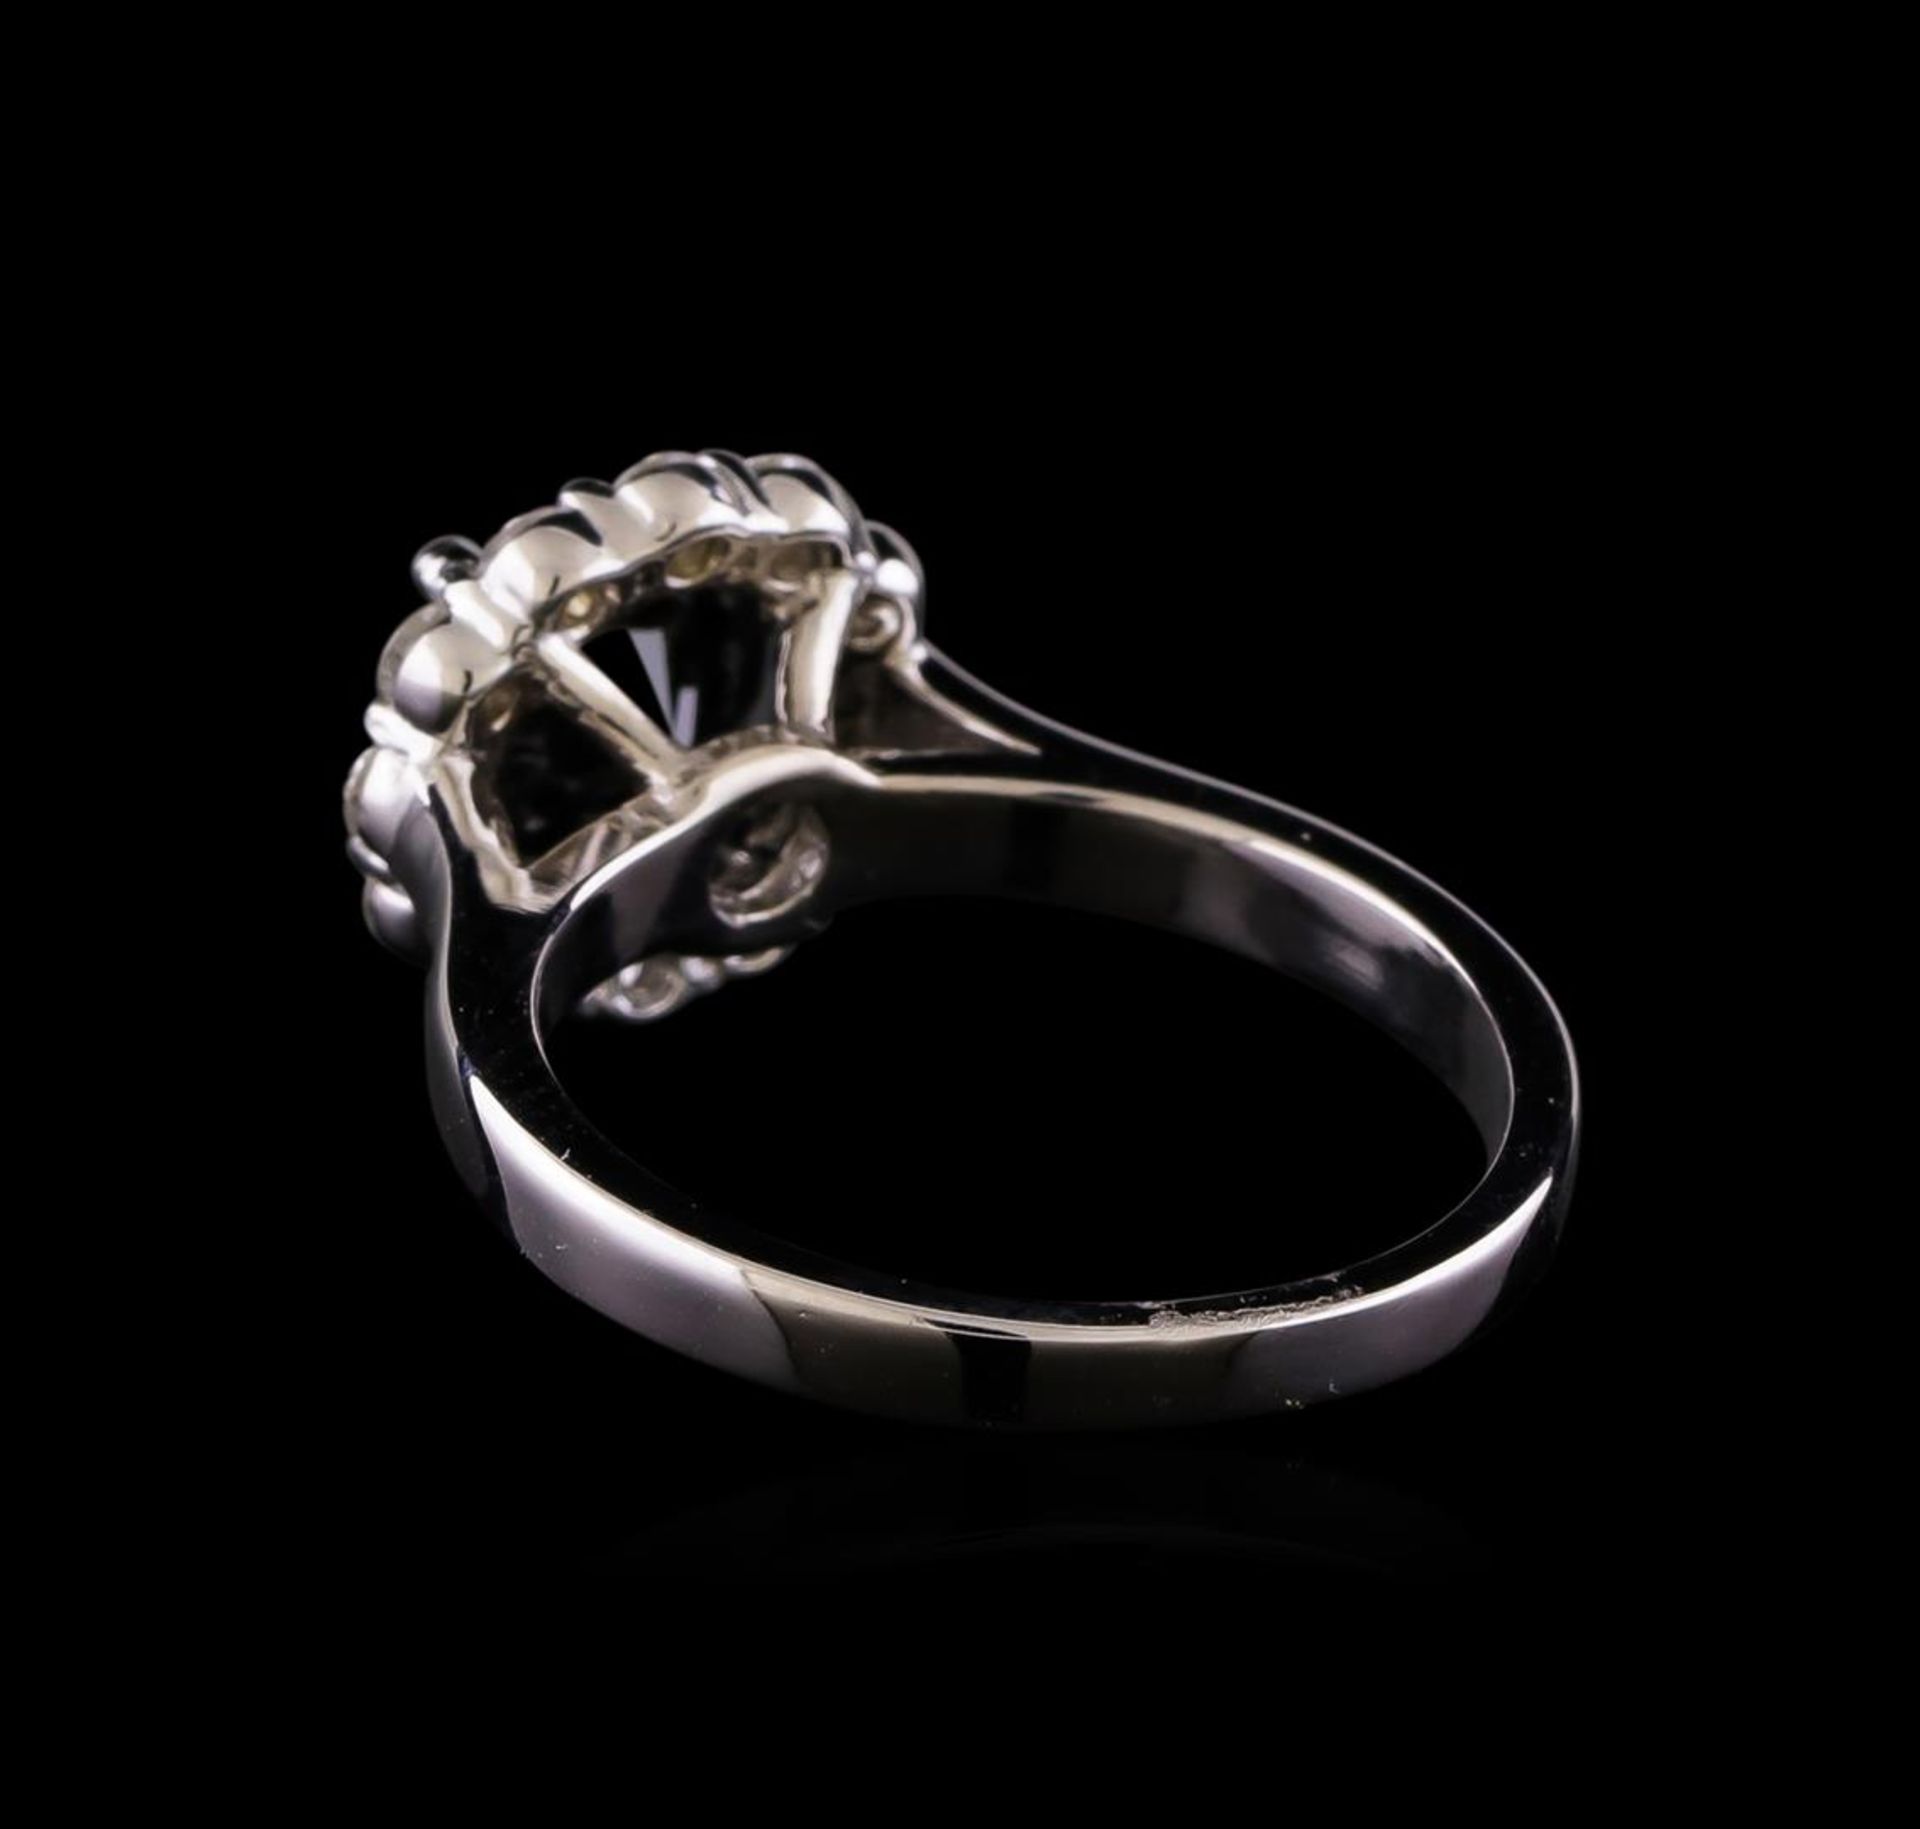 2.07 ctw Diamond Ring - 14KT White Gold - Image 3 of 4